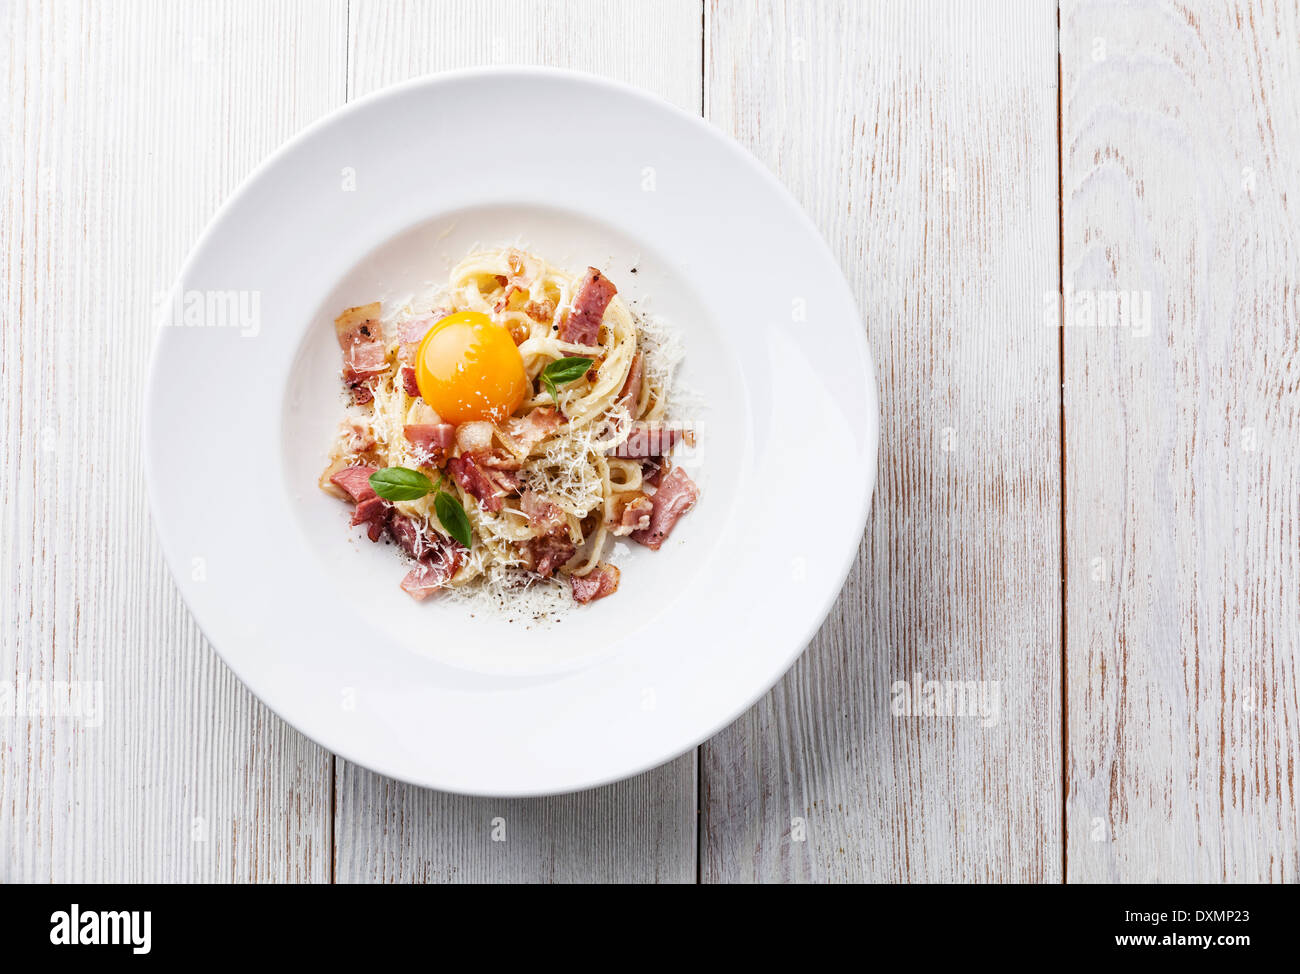 Spaghetti Carbonara on white plate with ham and yolk Stock Photo